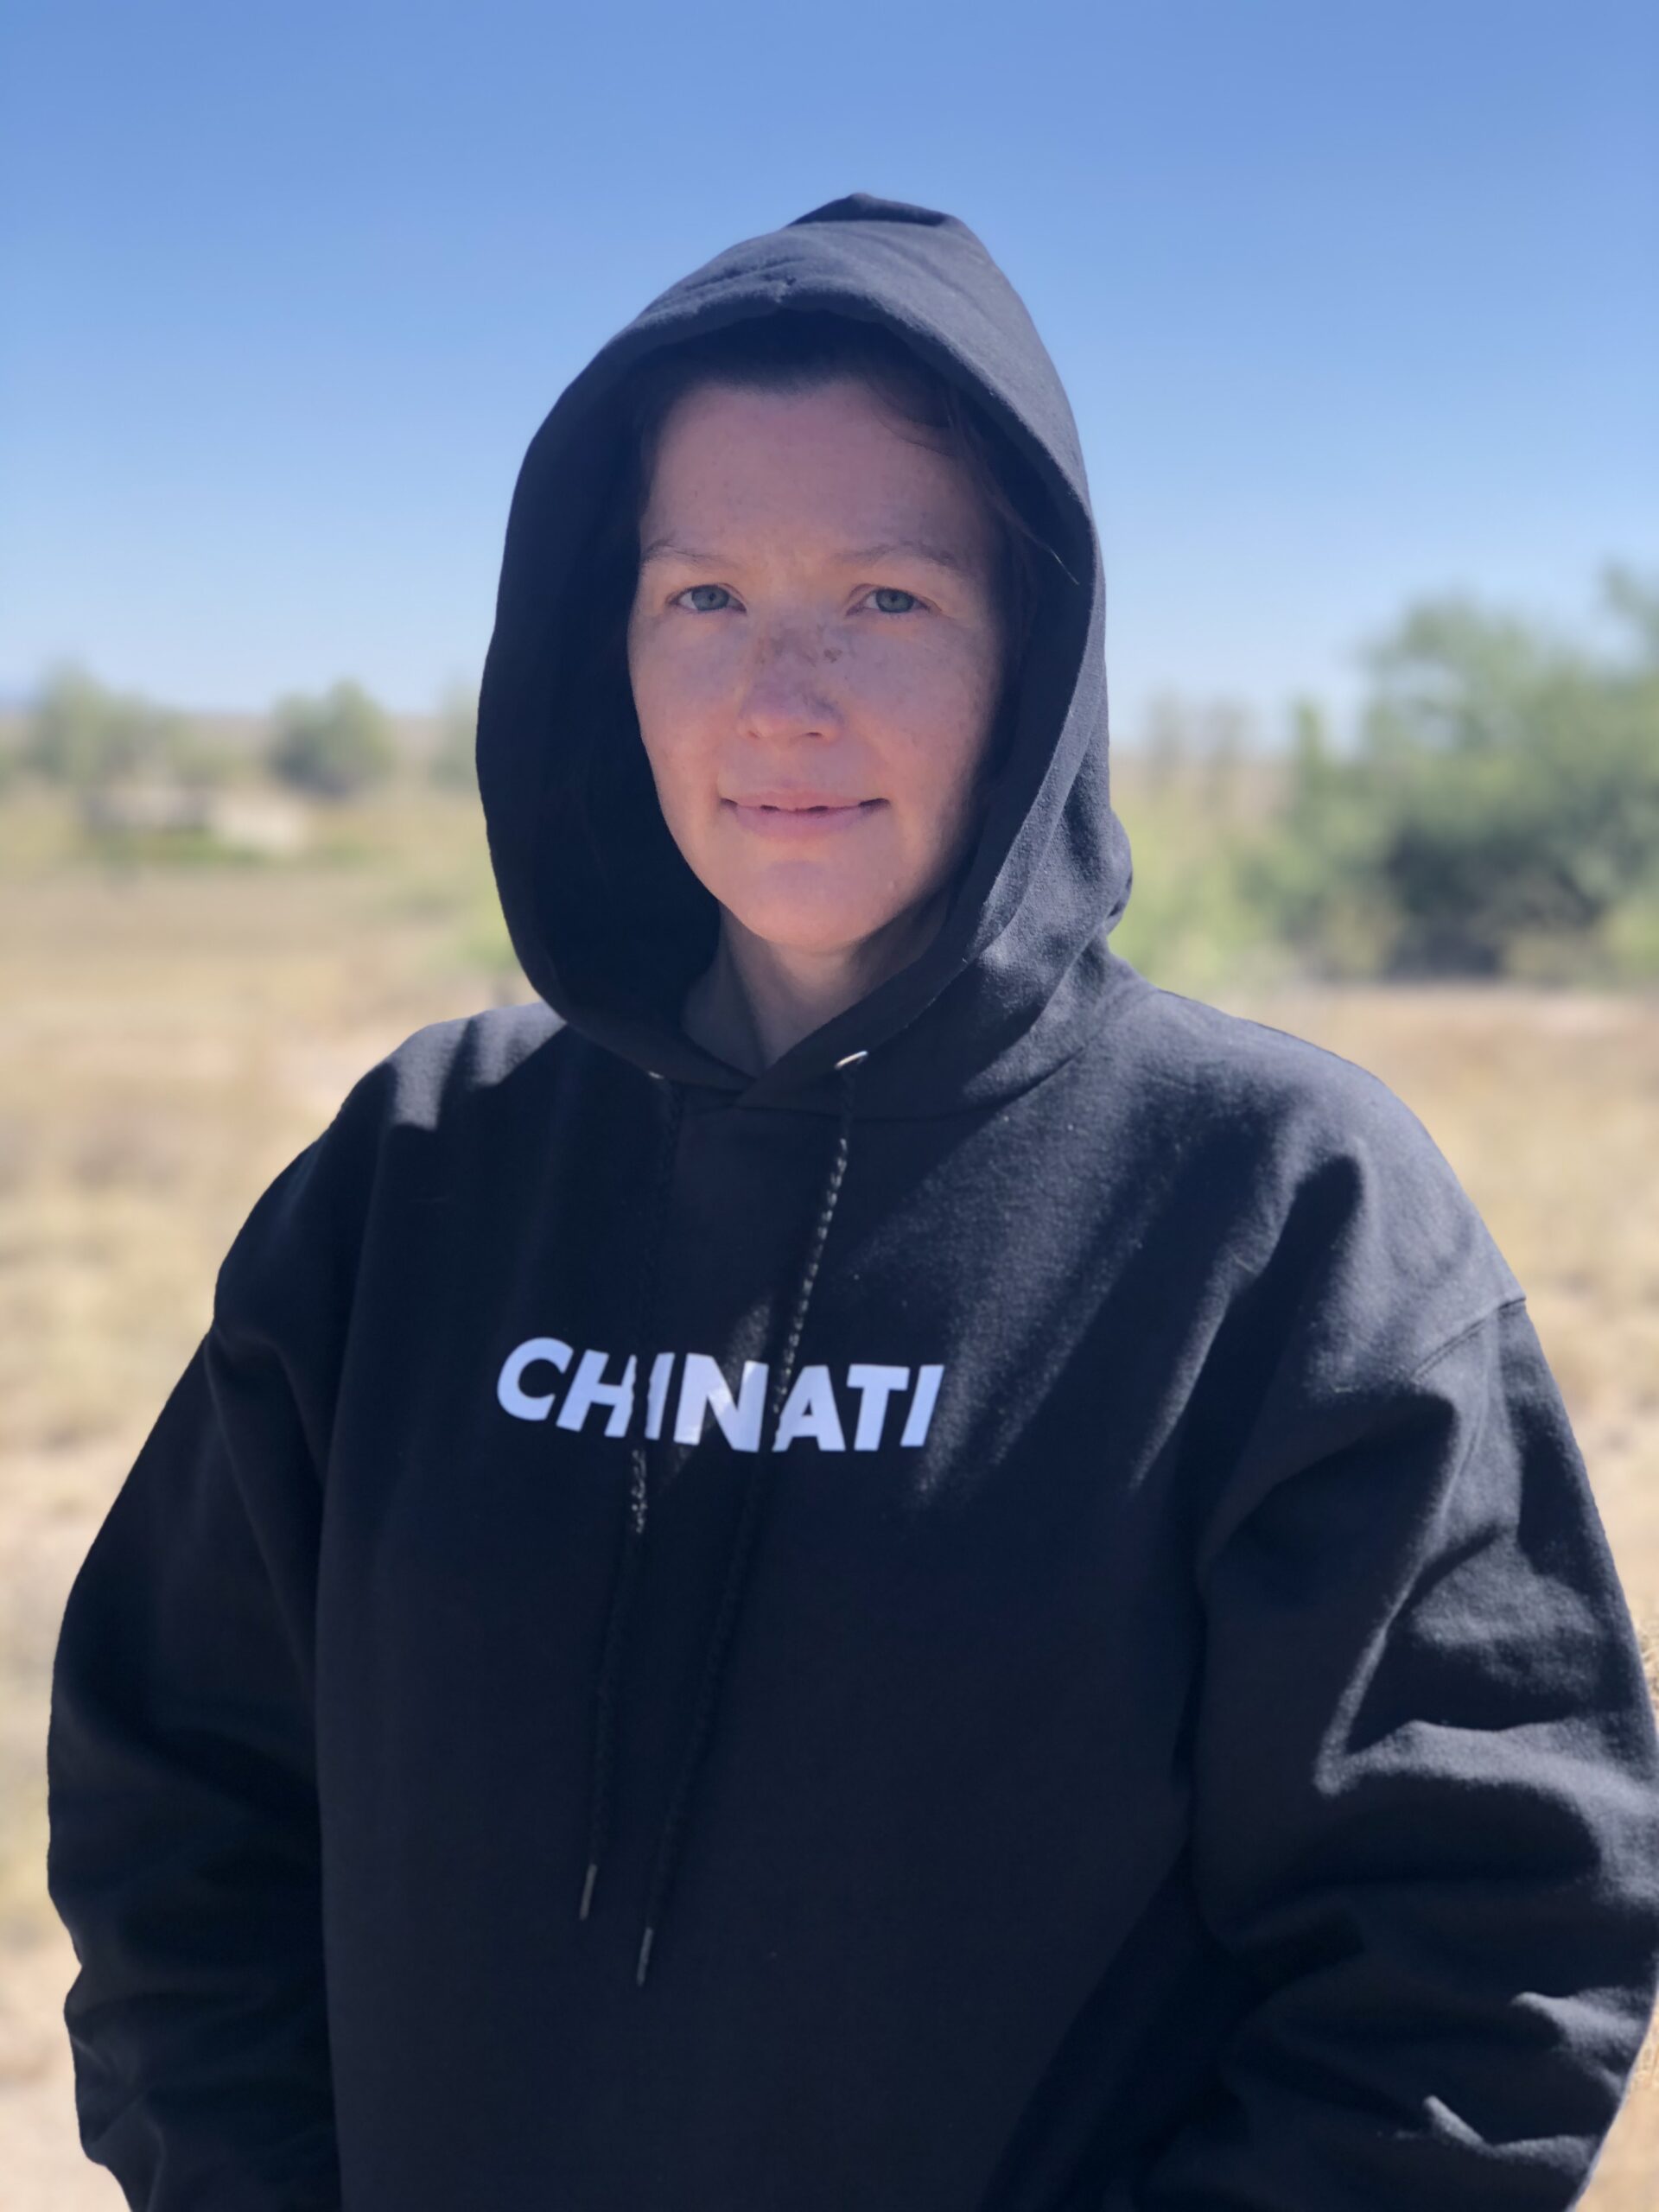 Sarah in the Chinati hoodie